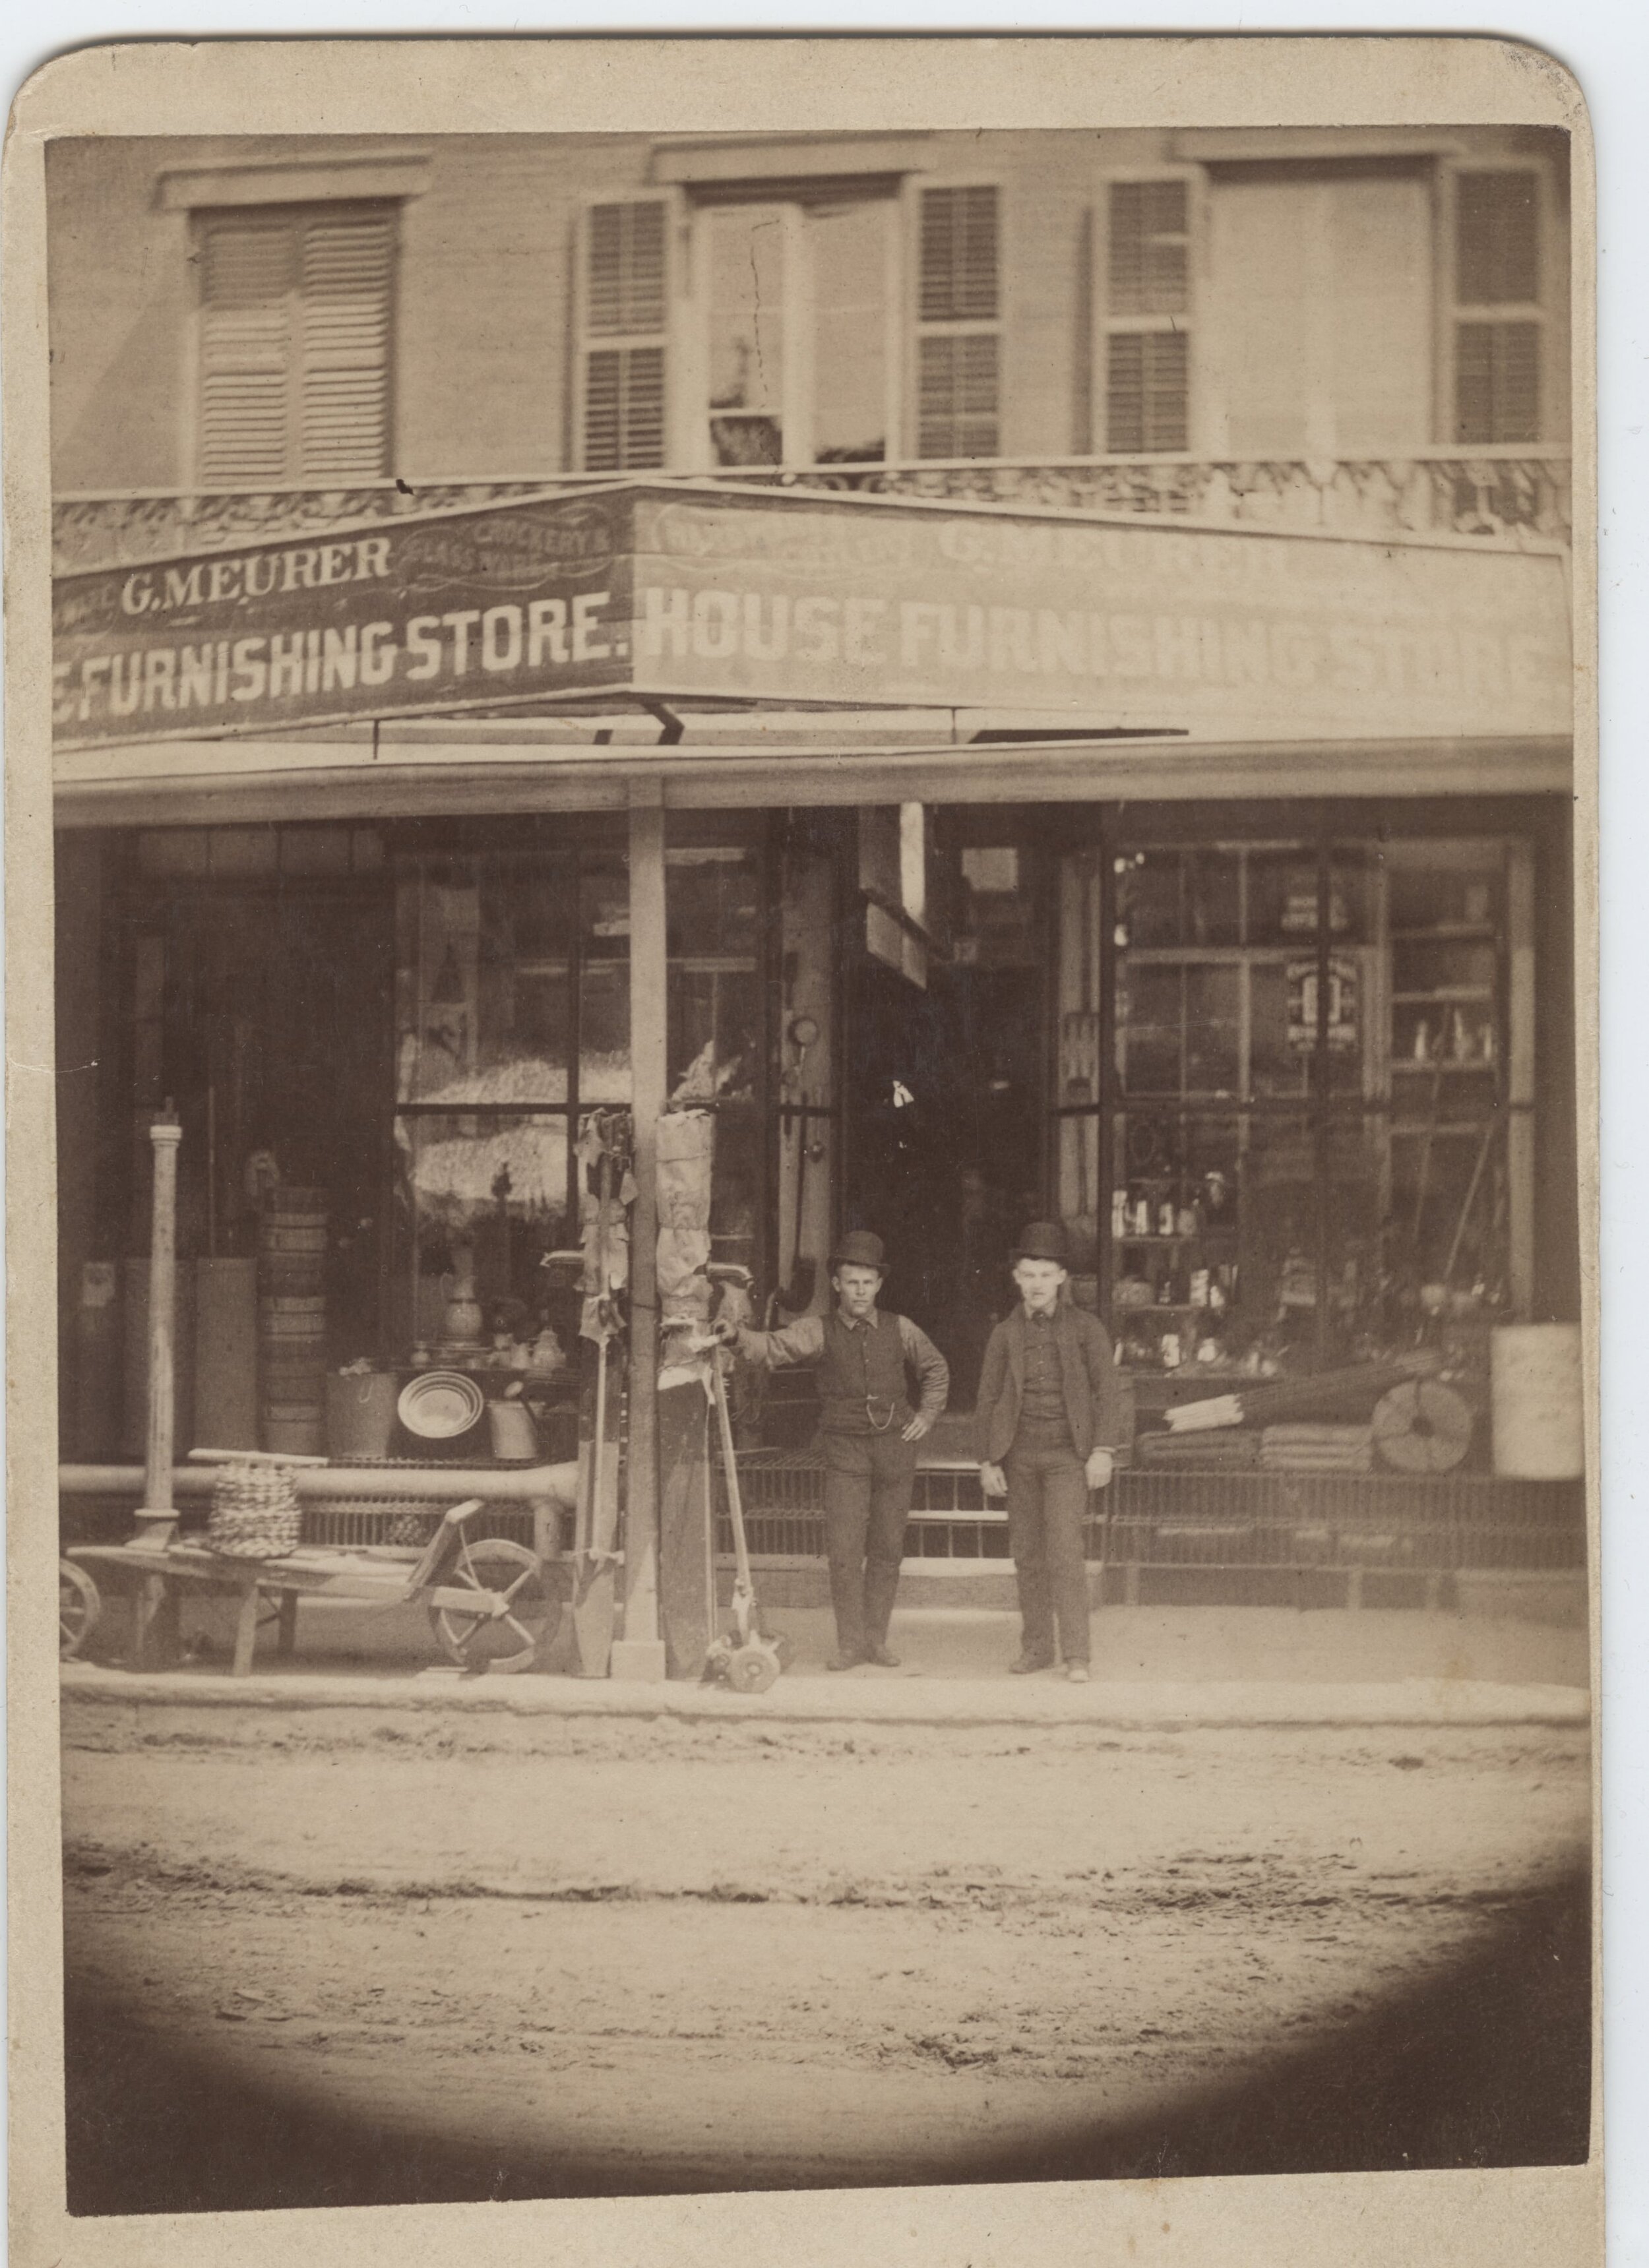 George Meurer House Furnishing Store, June 25, 1888. (Copy)